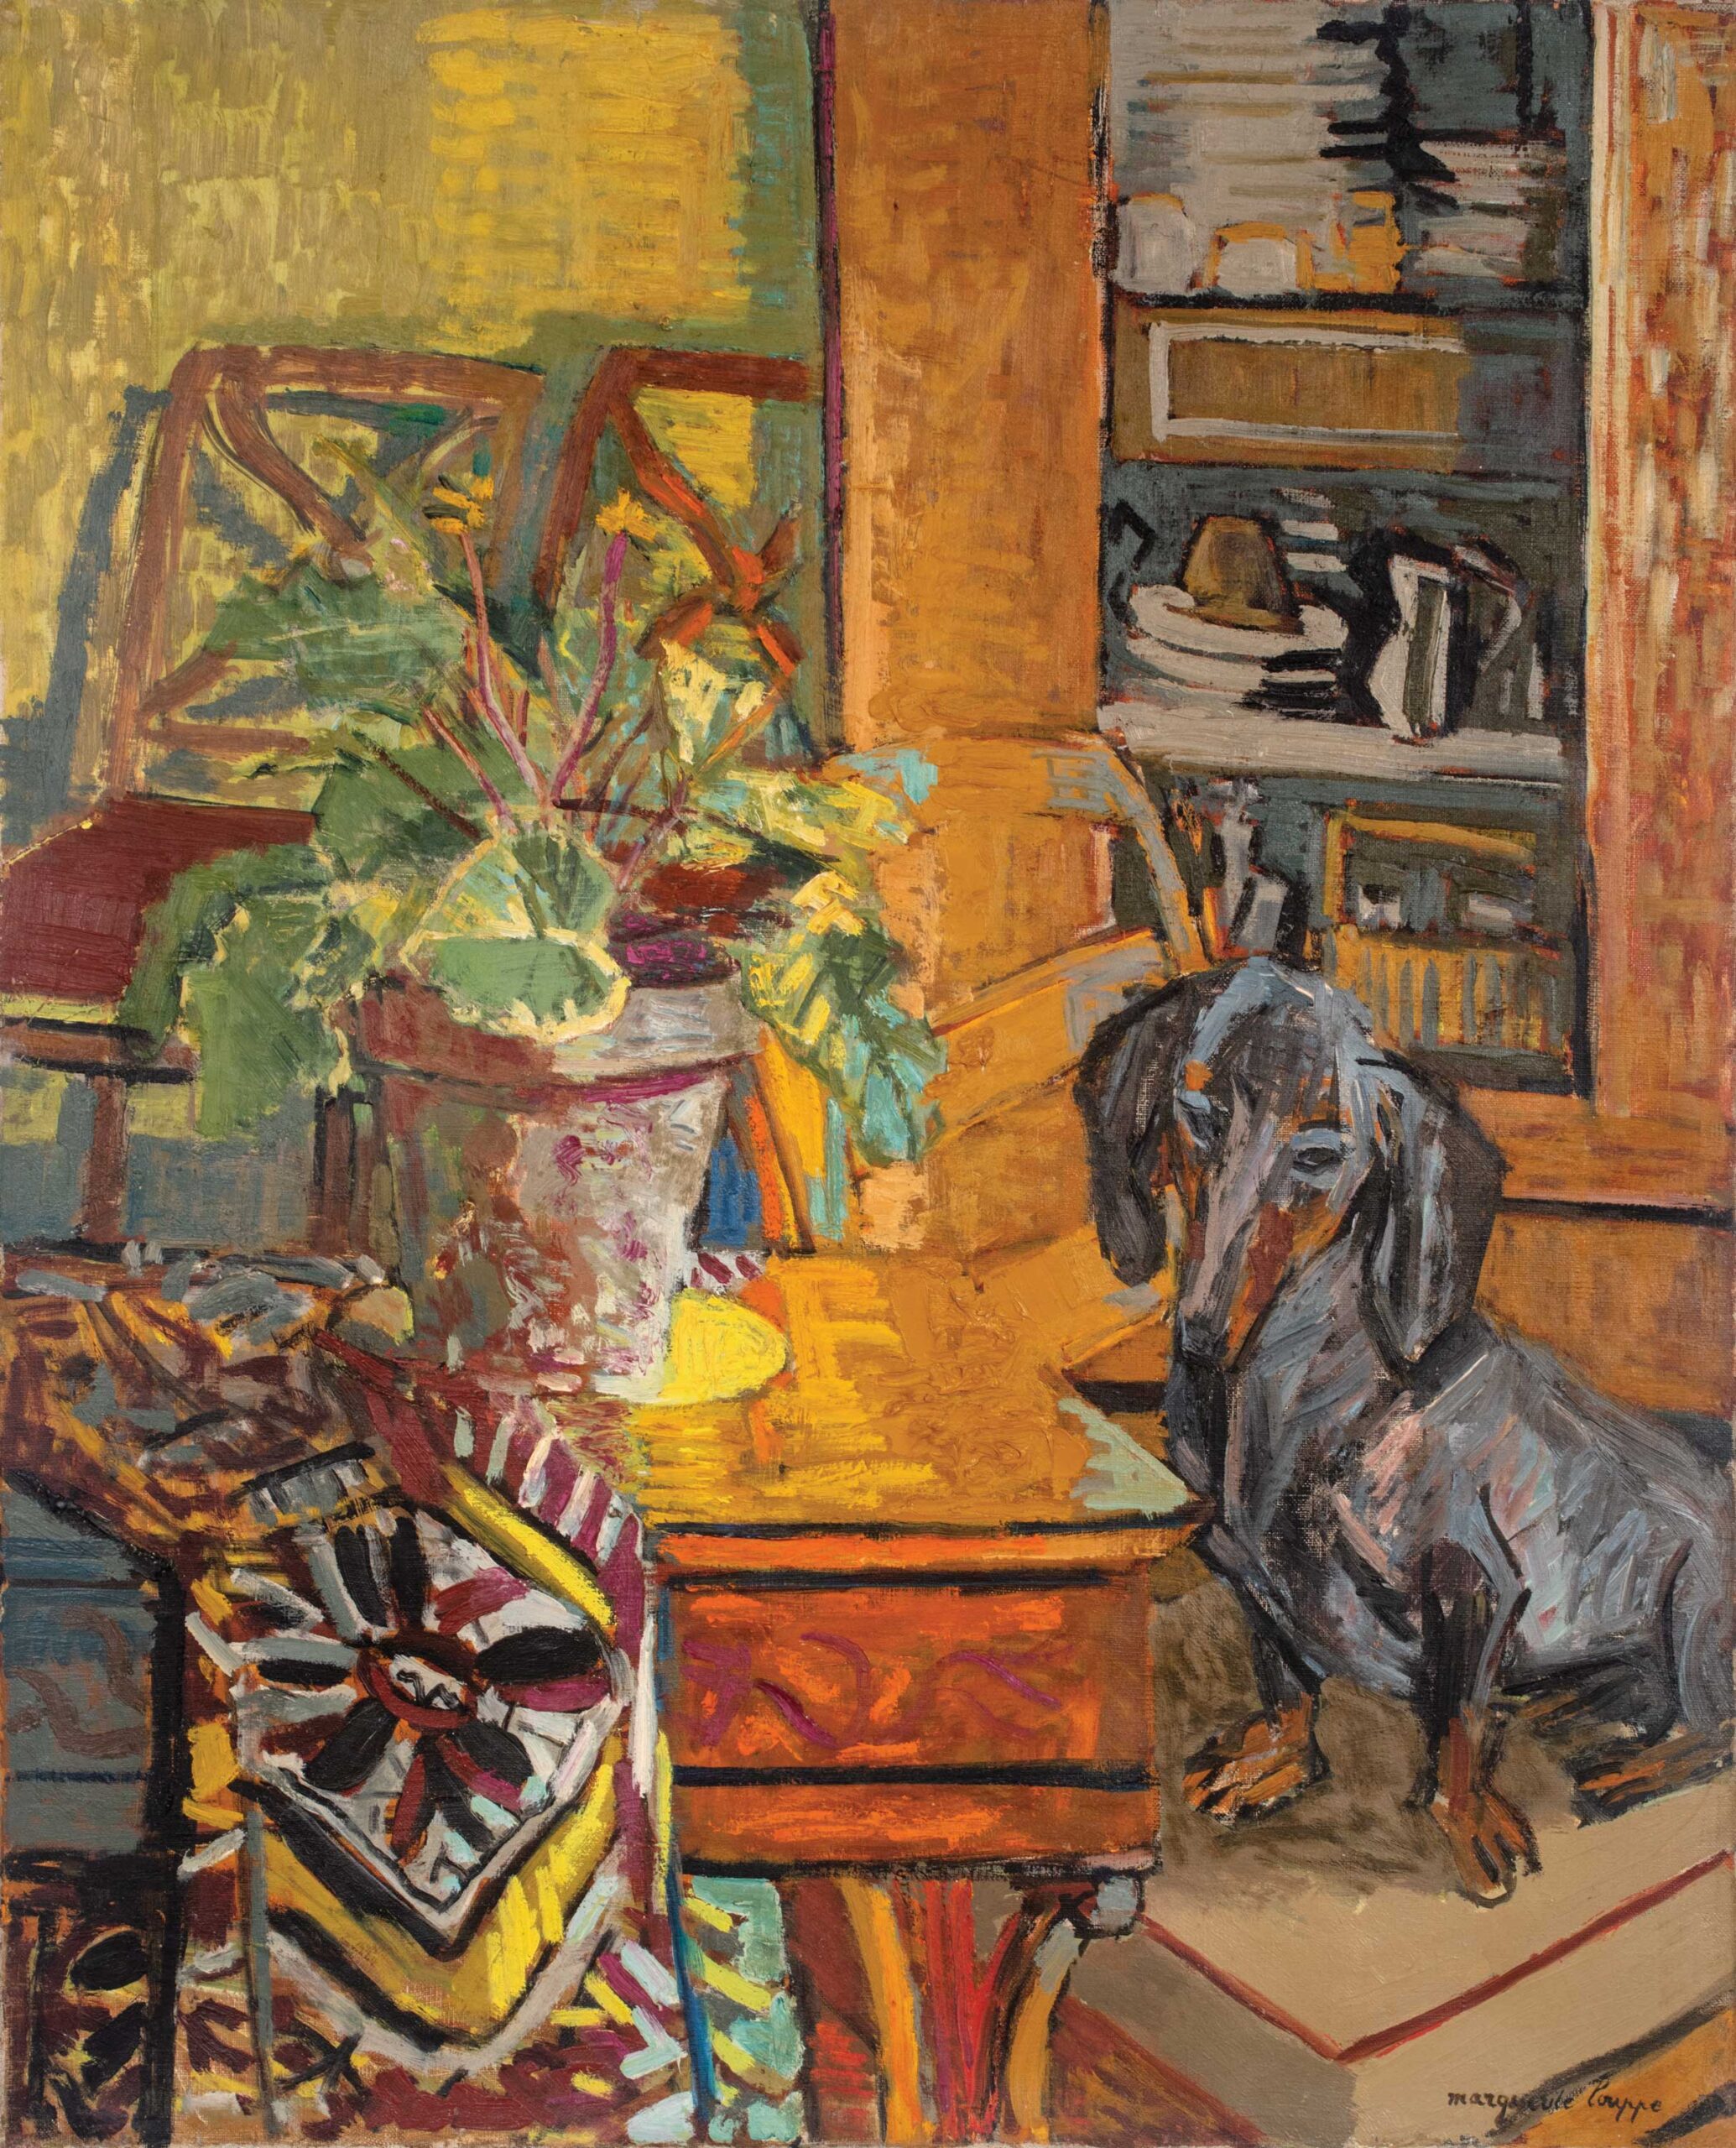 Marguerite Louppe, "Nestor au salon (Nestor Plant in the Living Room)," oil on canvas, 31 7/10 x 25 3/5 in.